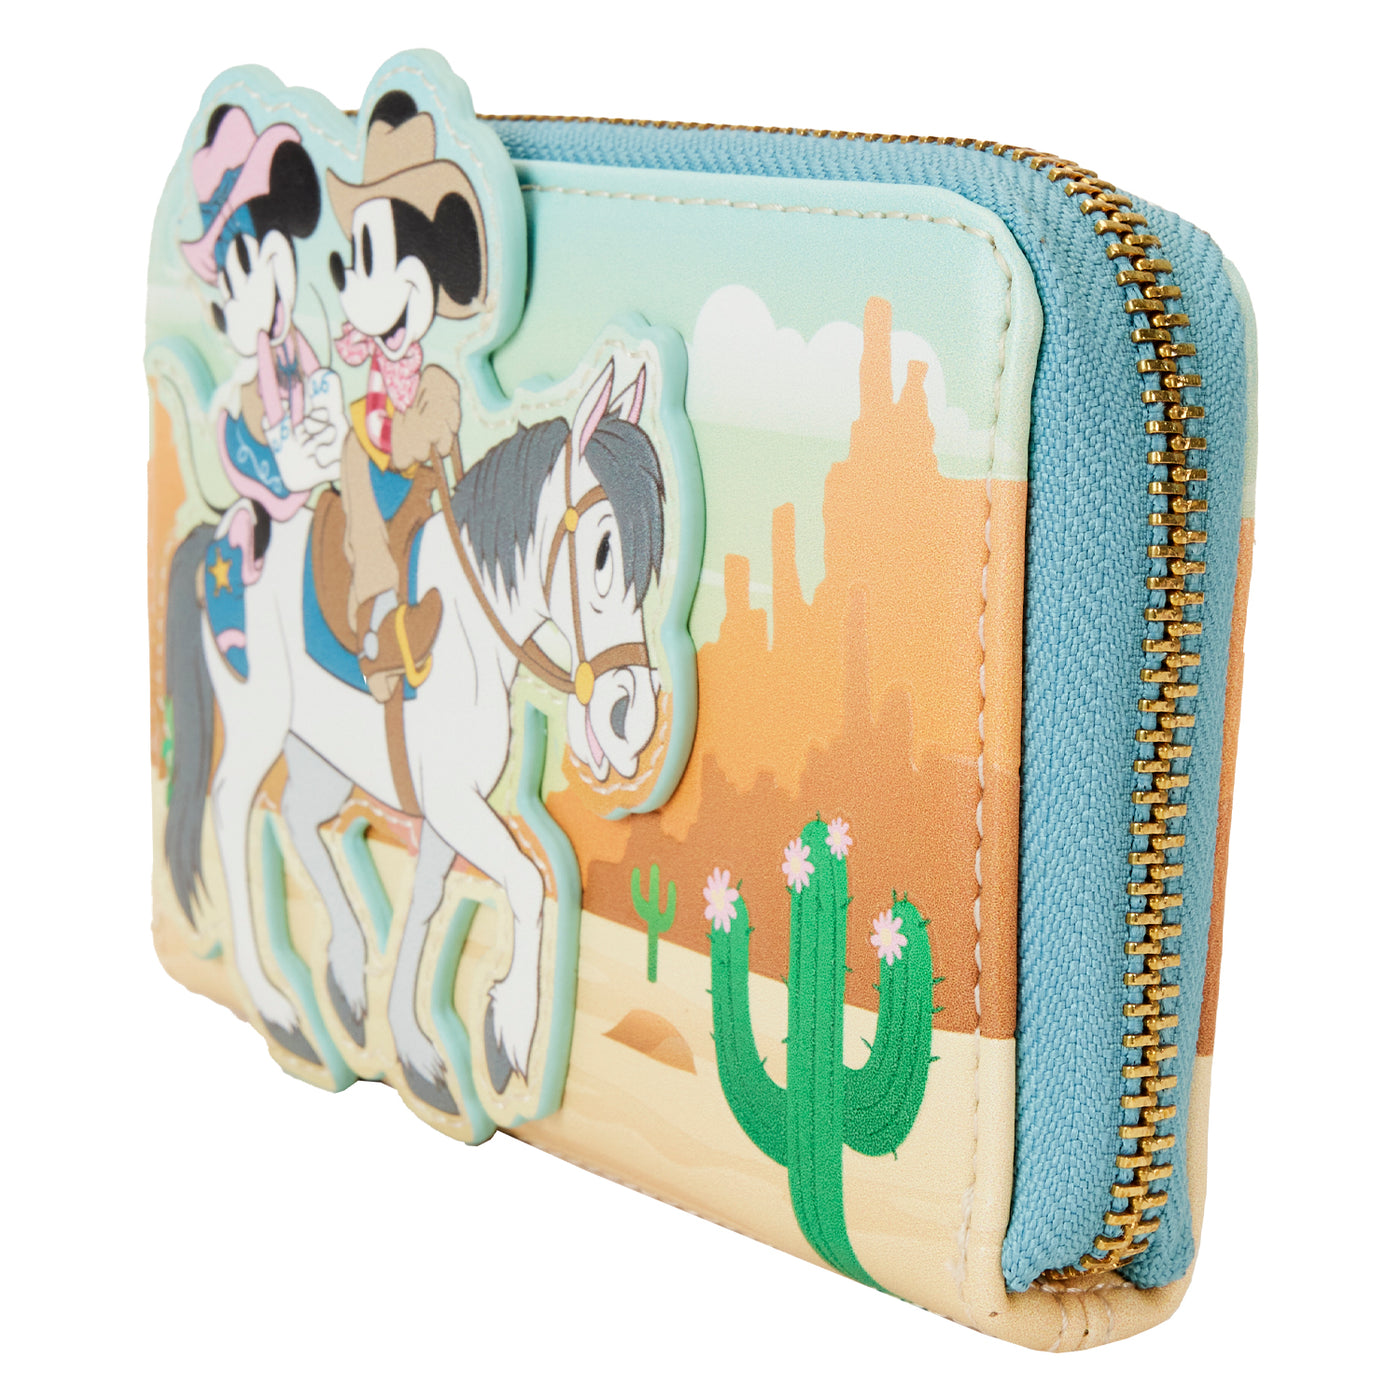 Disney Western Mickey & Minnie Wallet